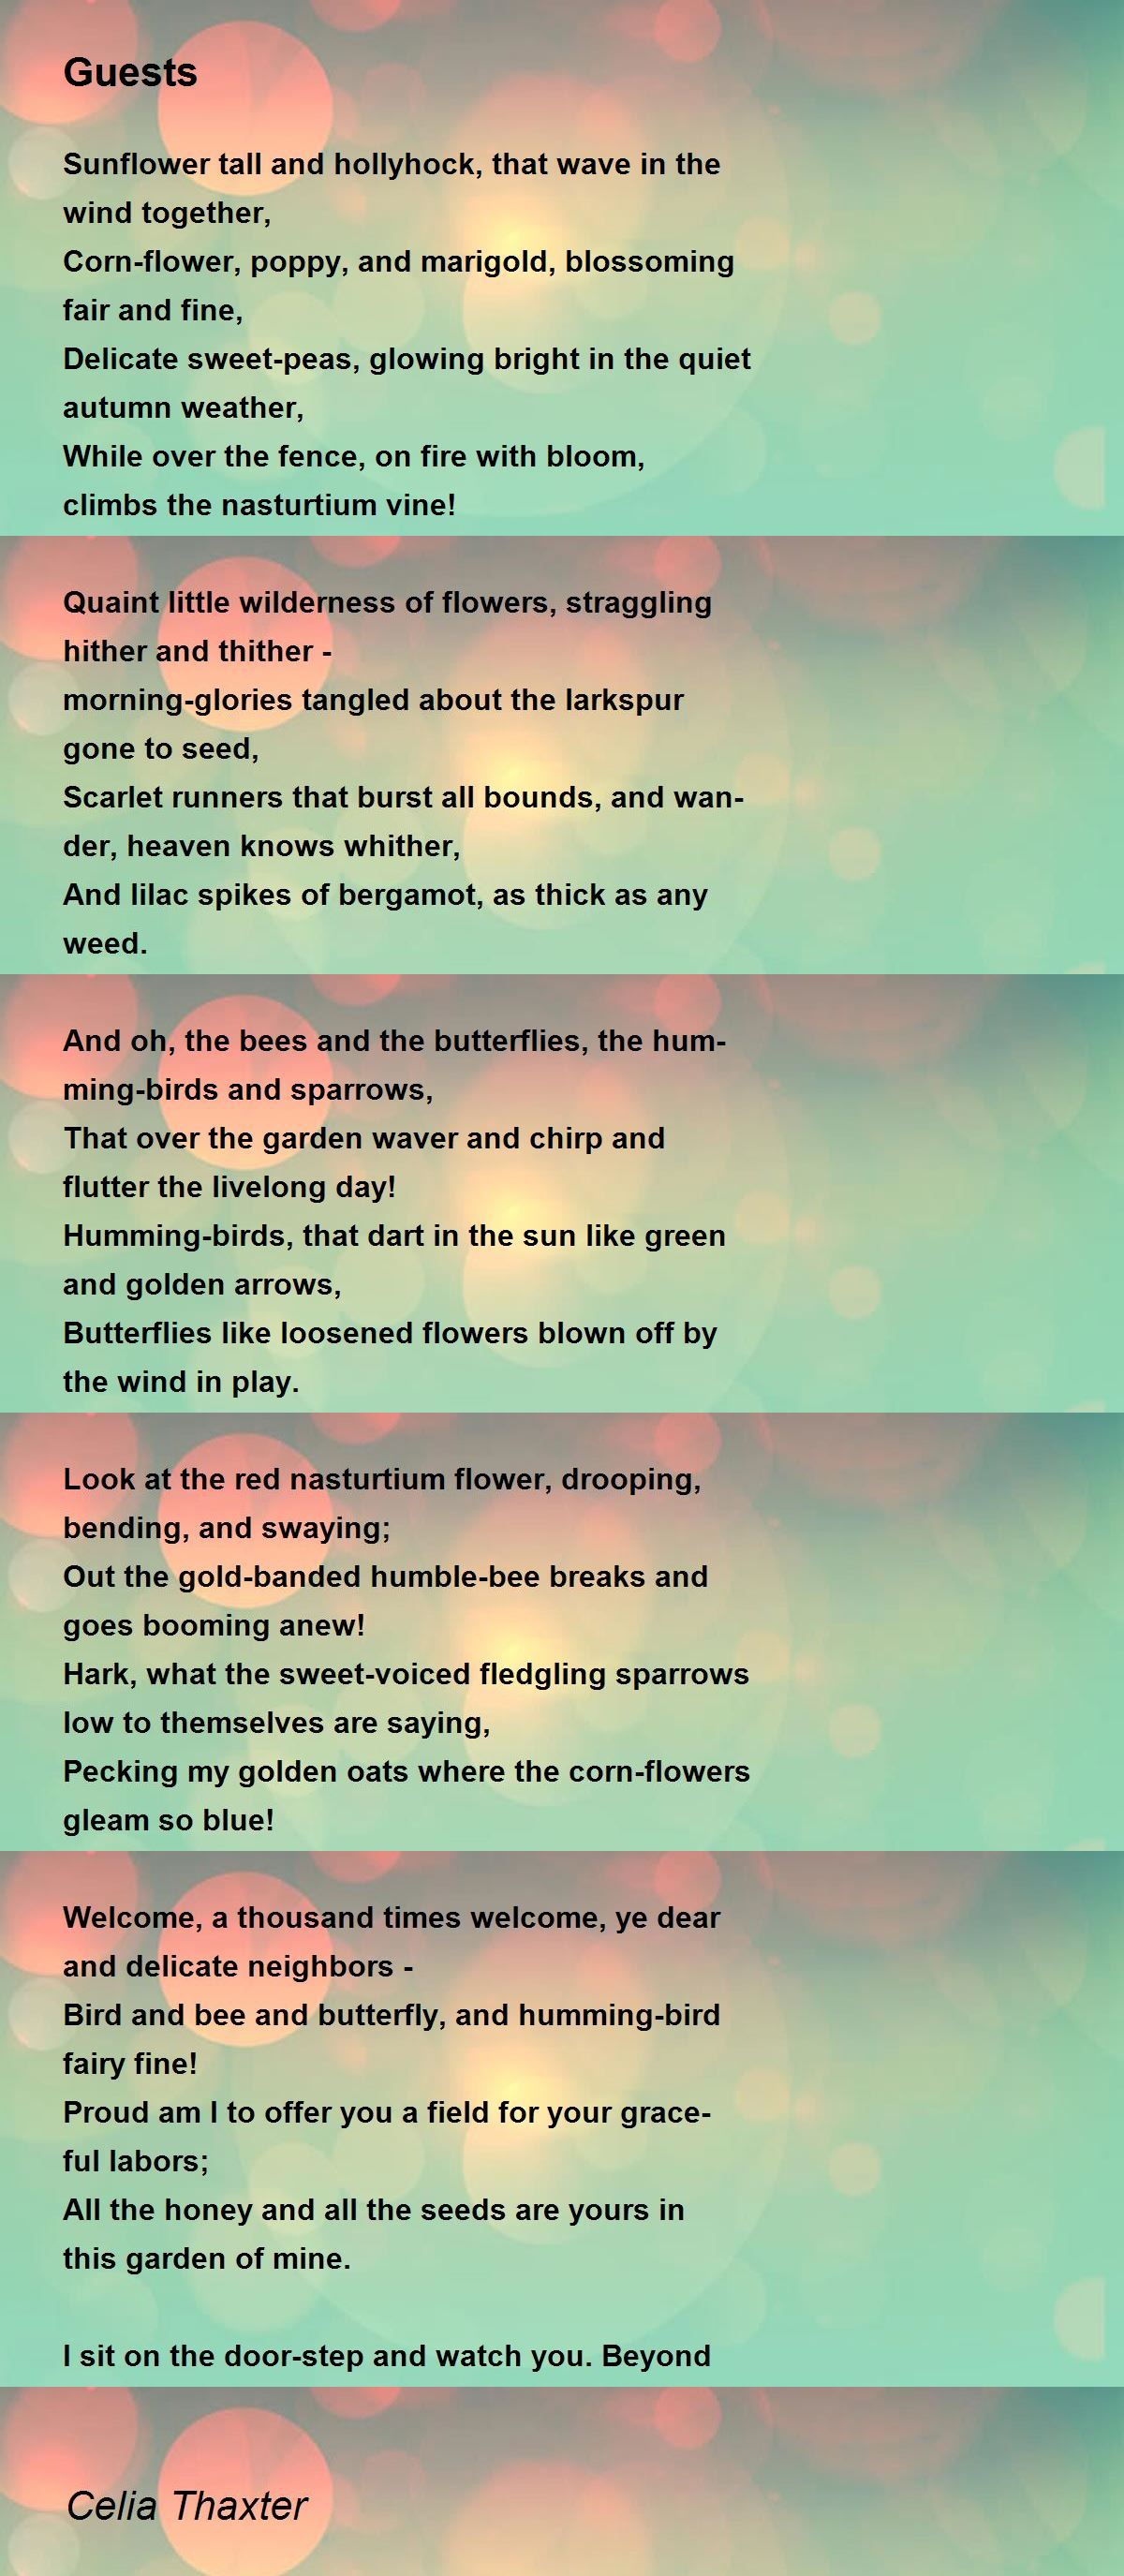 Guests Poem by Celia Thaxter - Poem Hunter